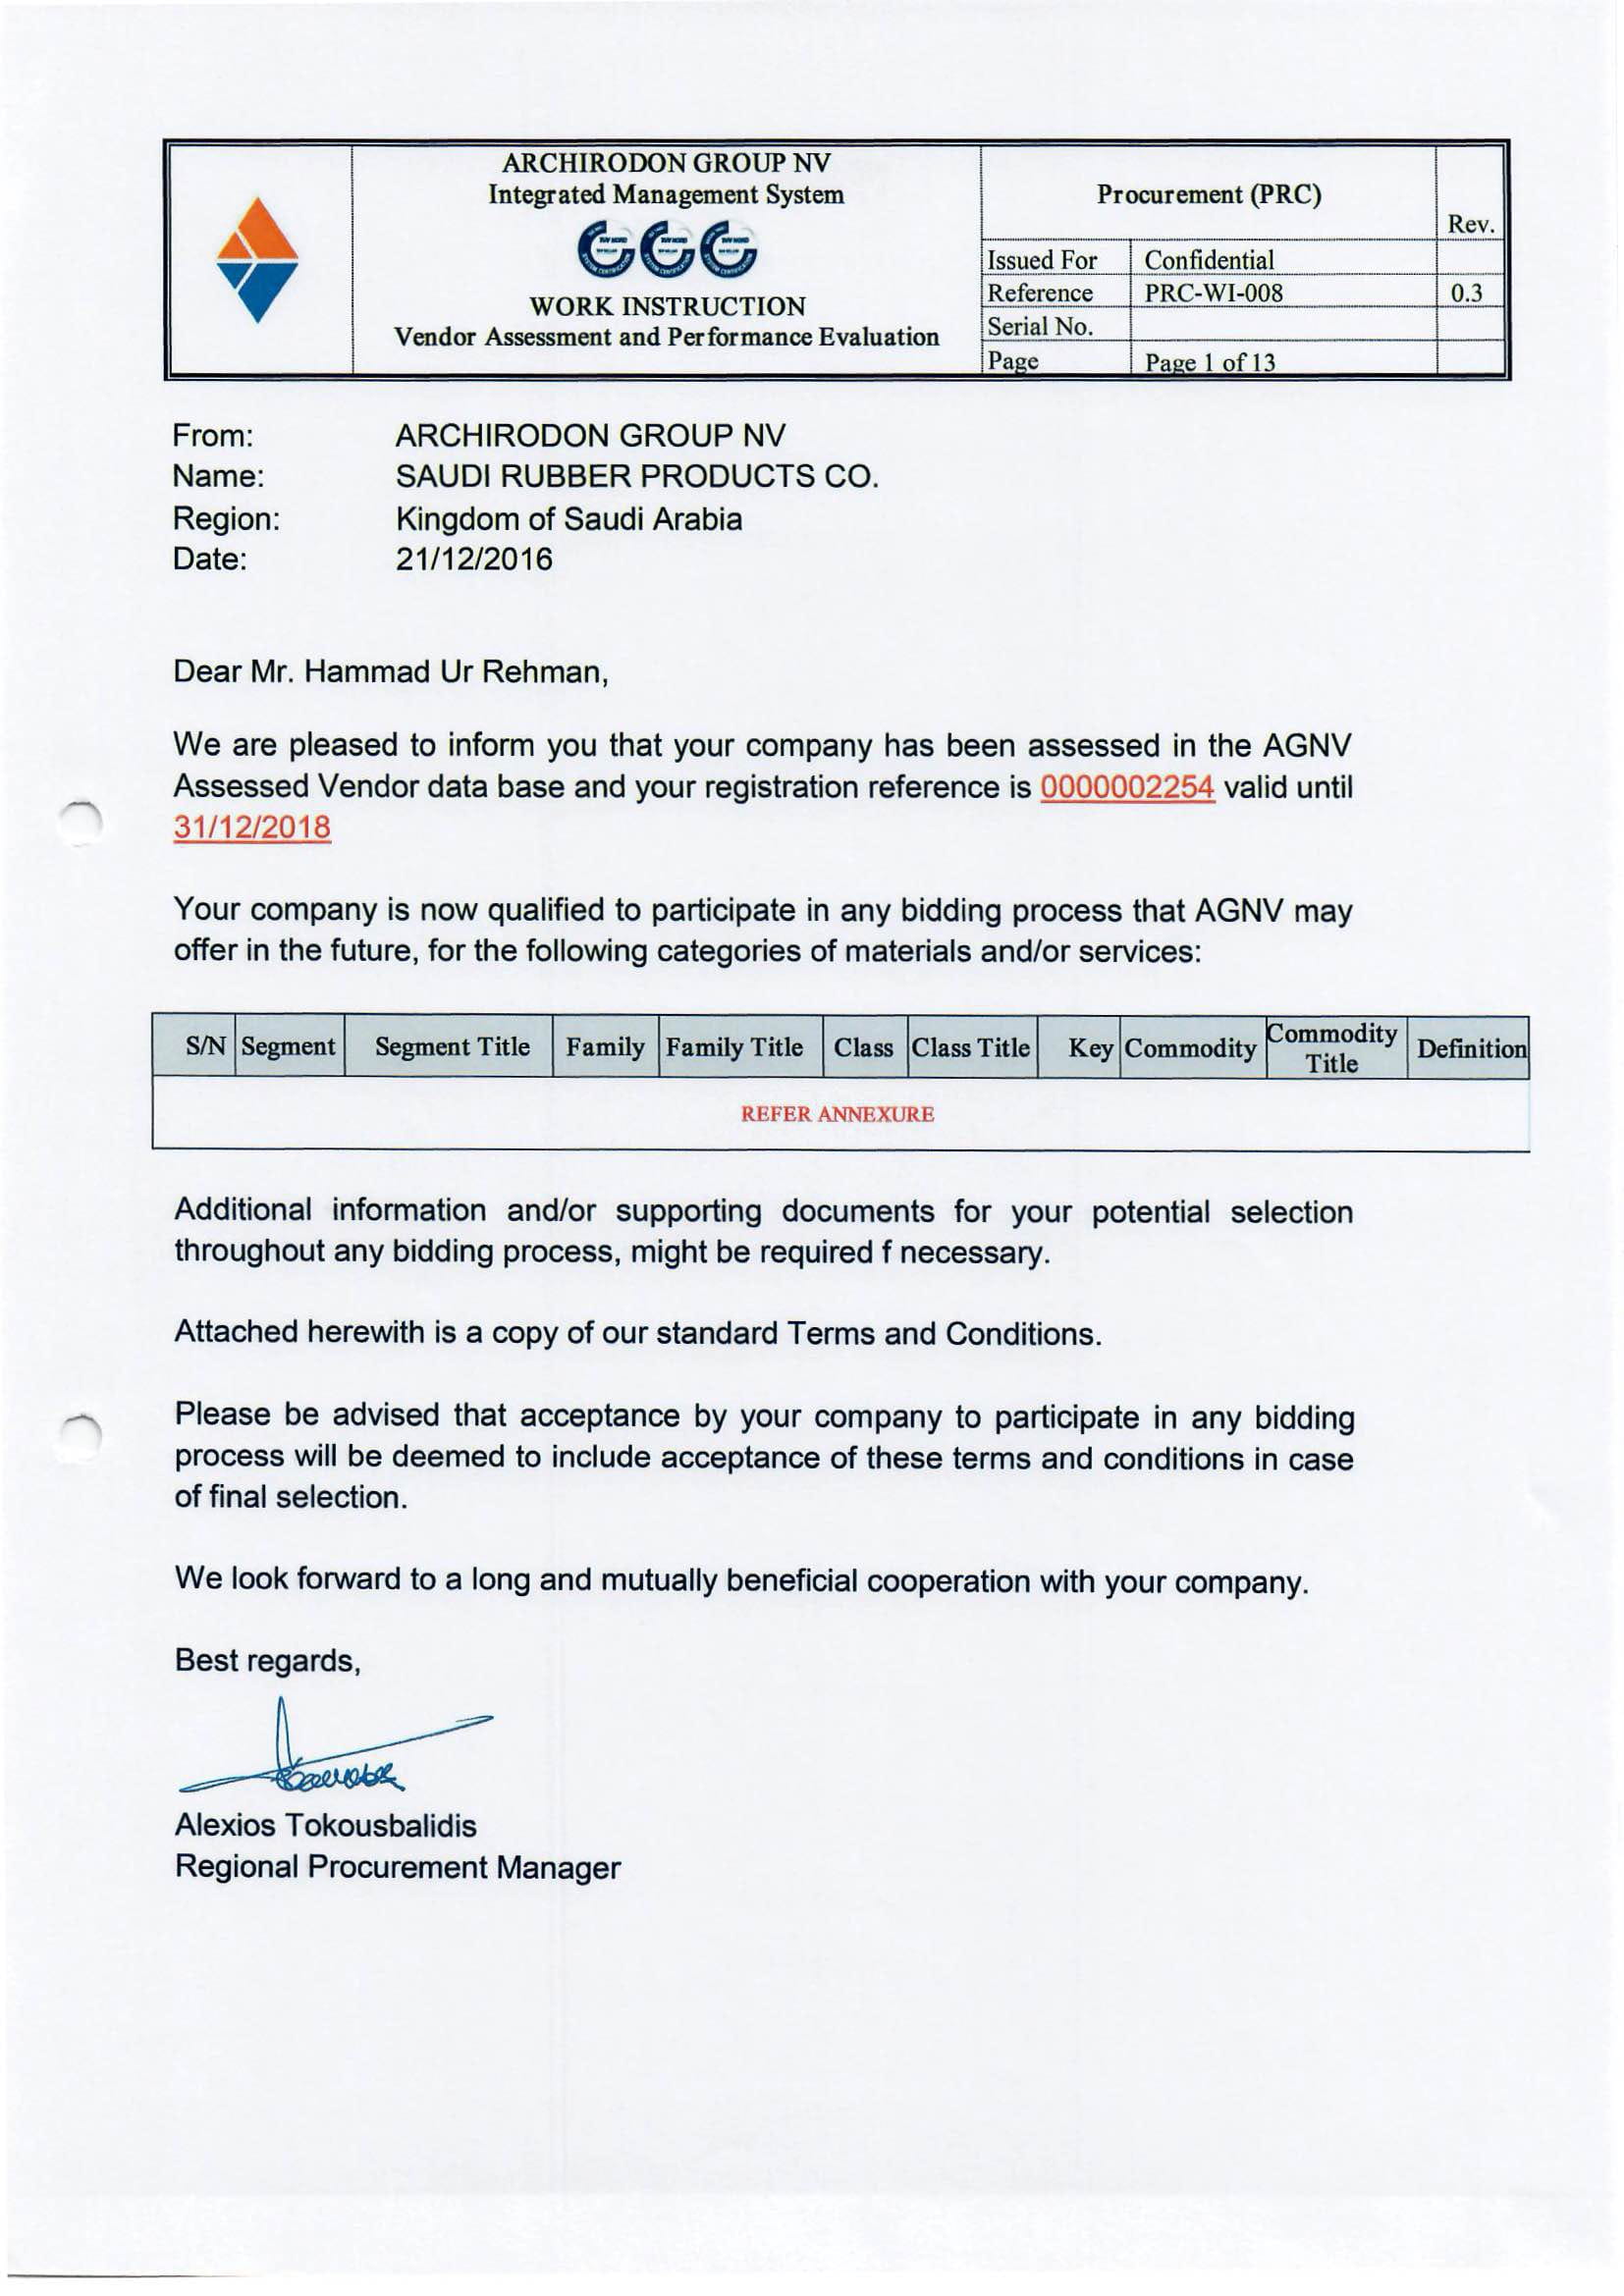 Certificate of Archirodon Group N.V-1